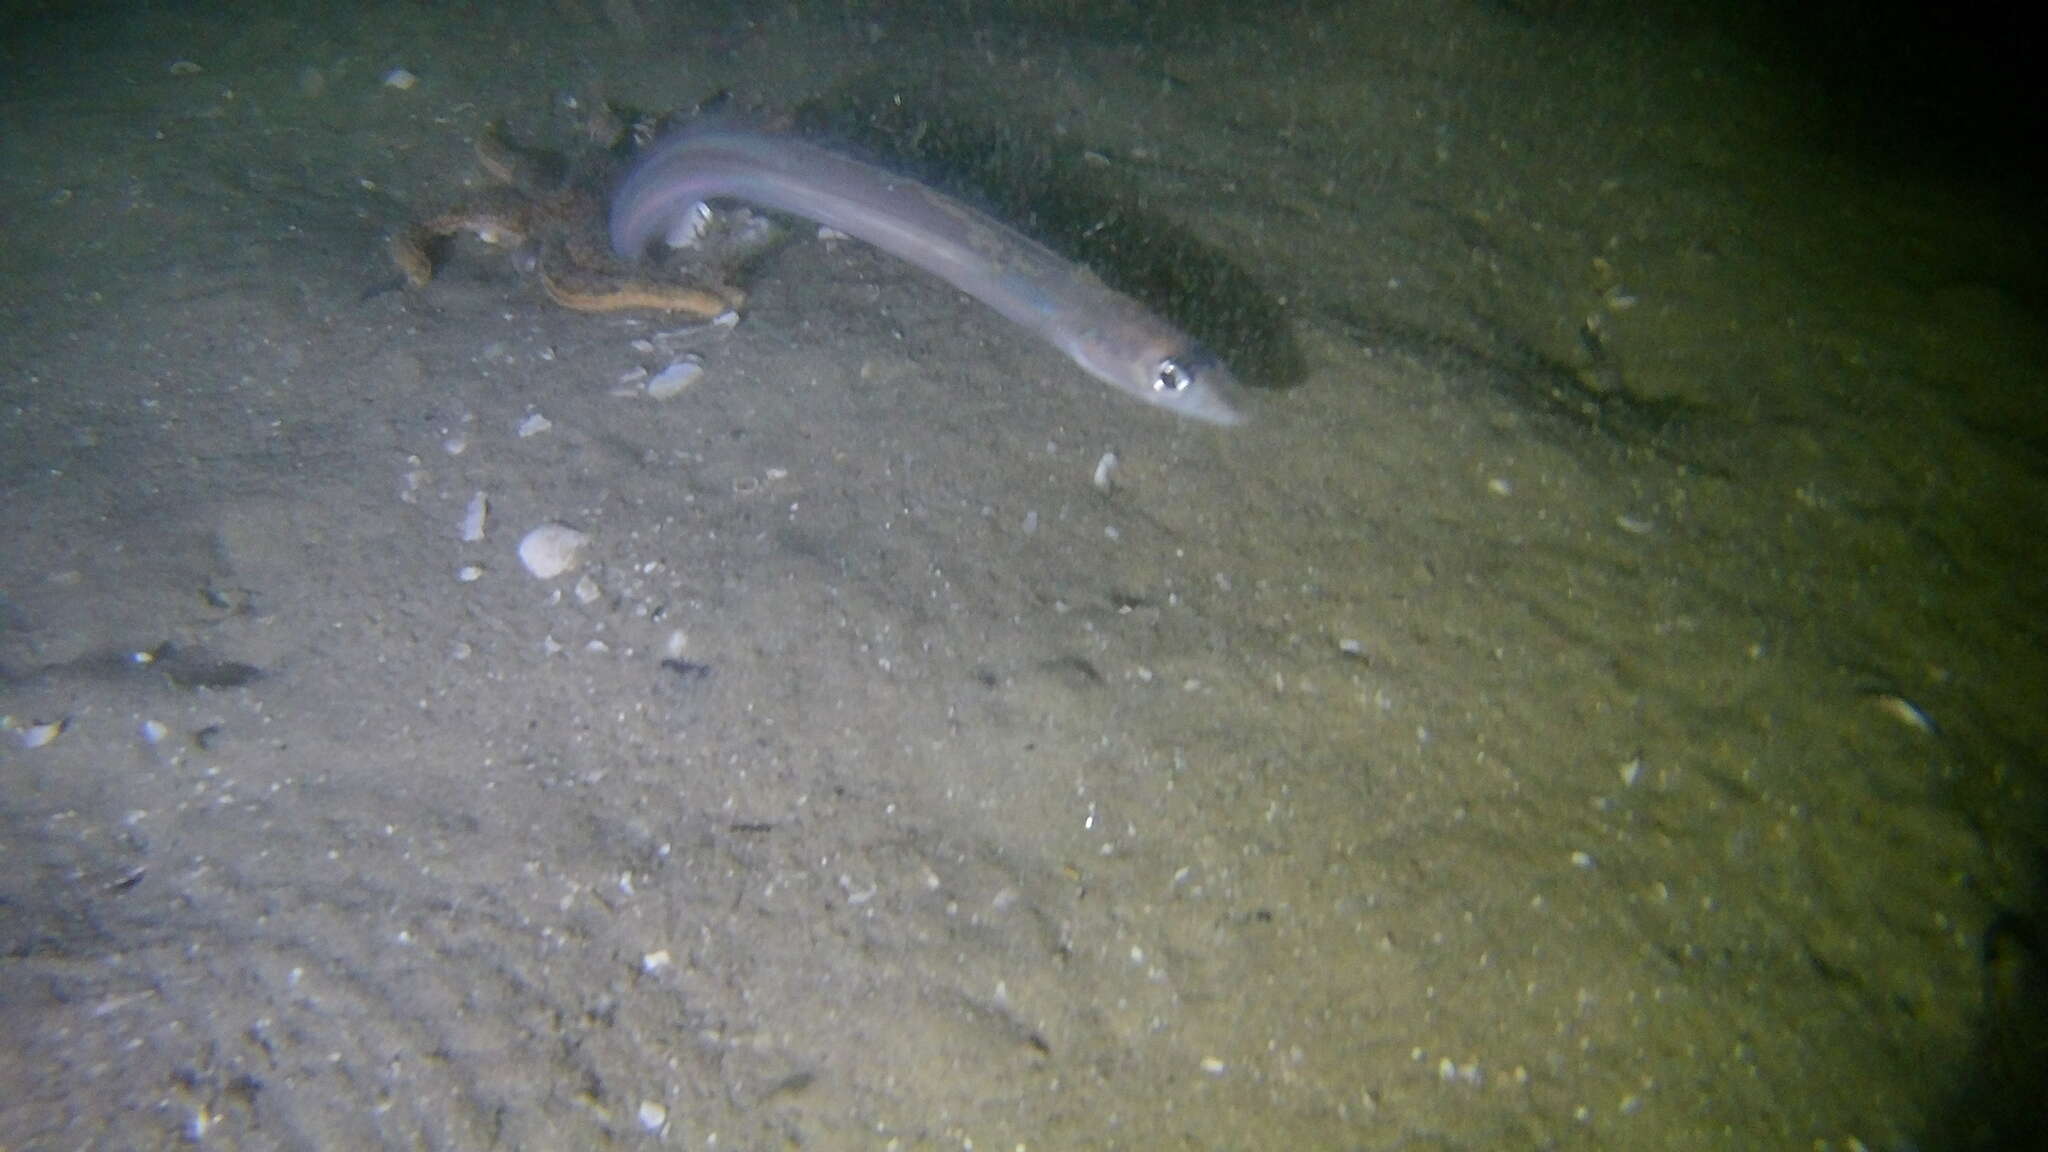 Image of Little conger eel